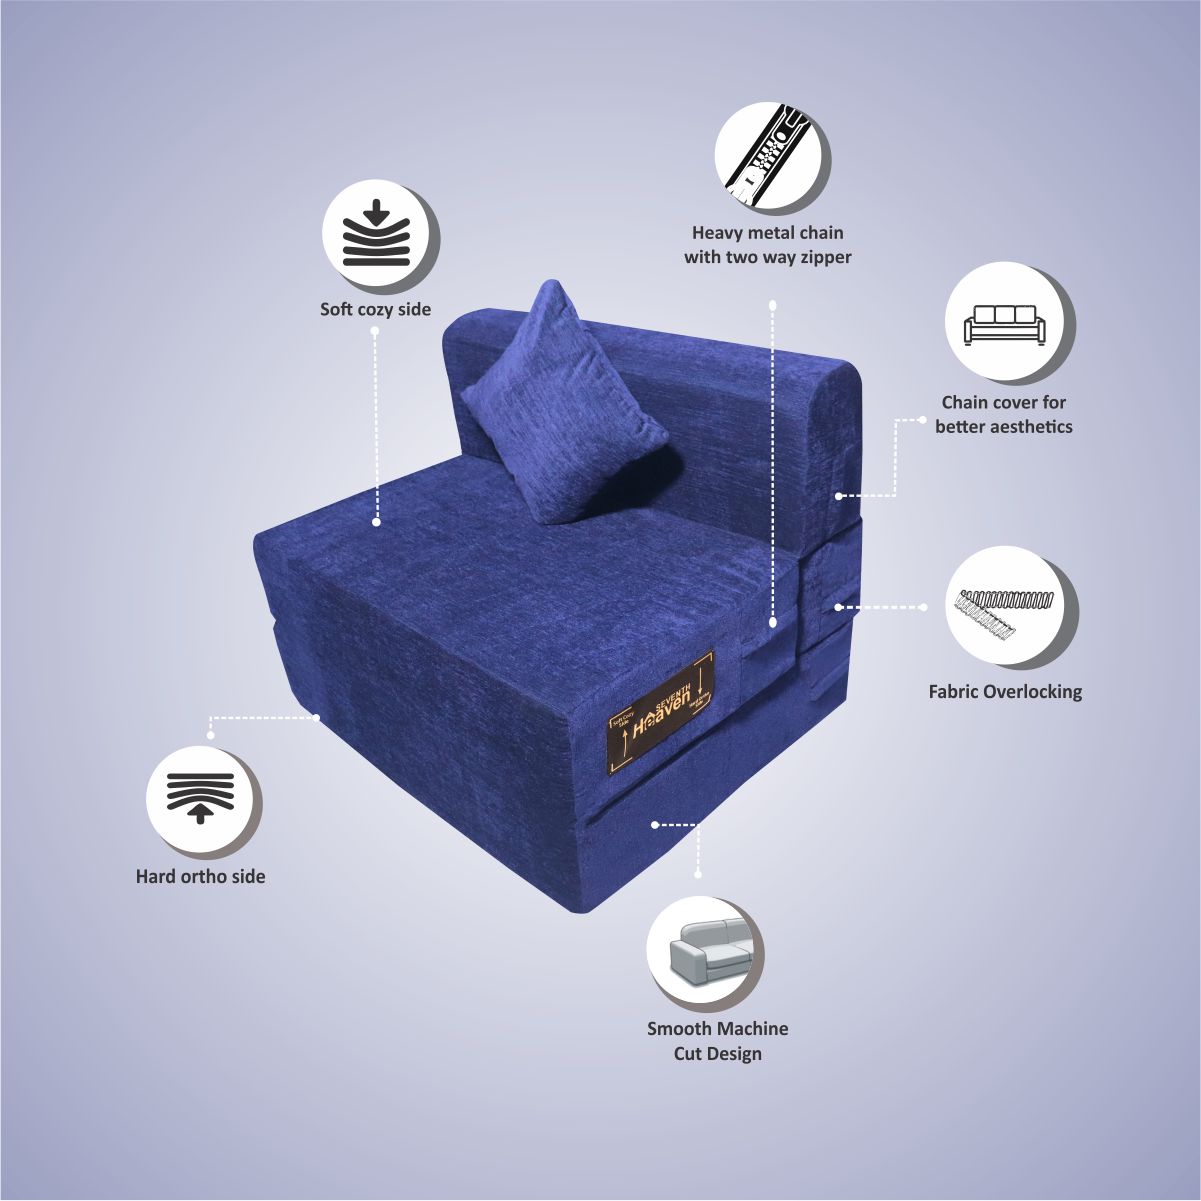 Blue Chenille Molfino Fabric 6×3 Sofa cum Bed with 1 Cushion